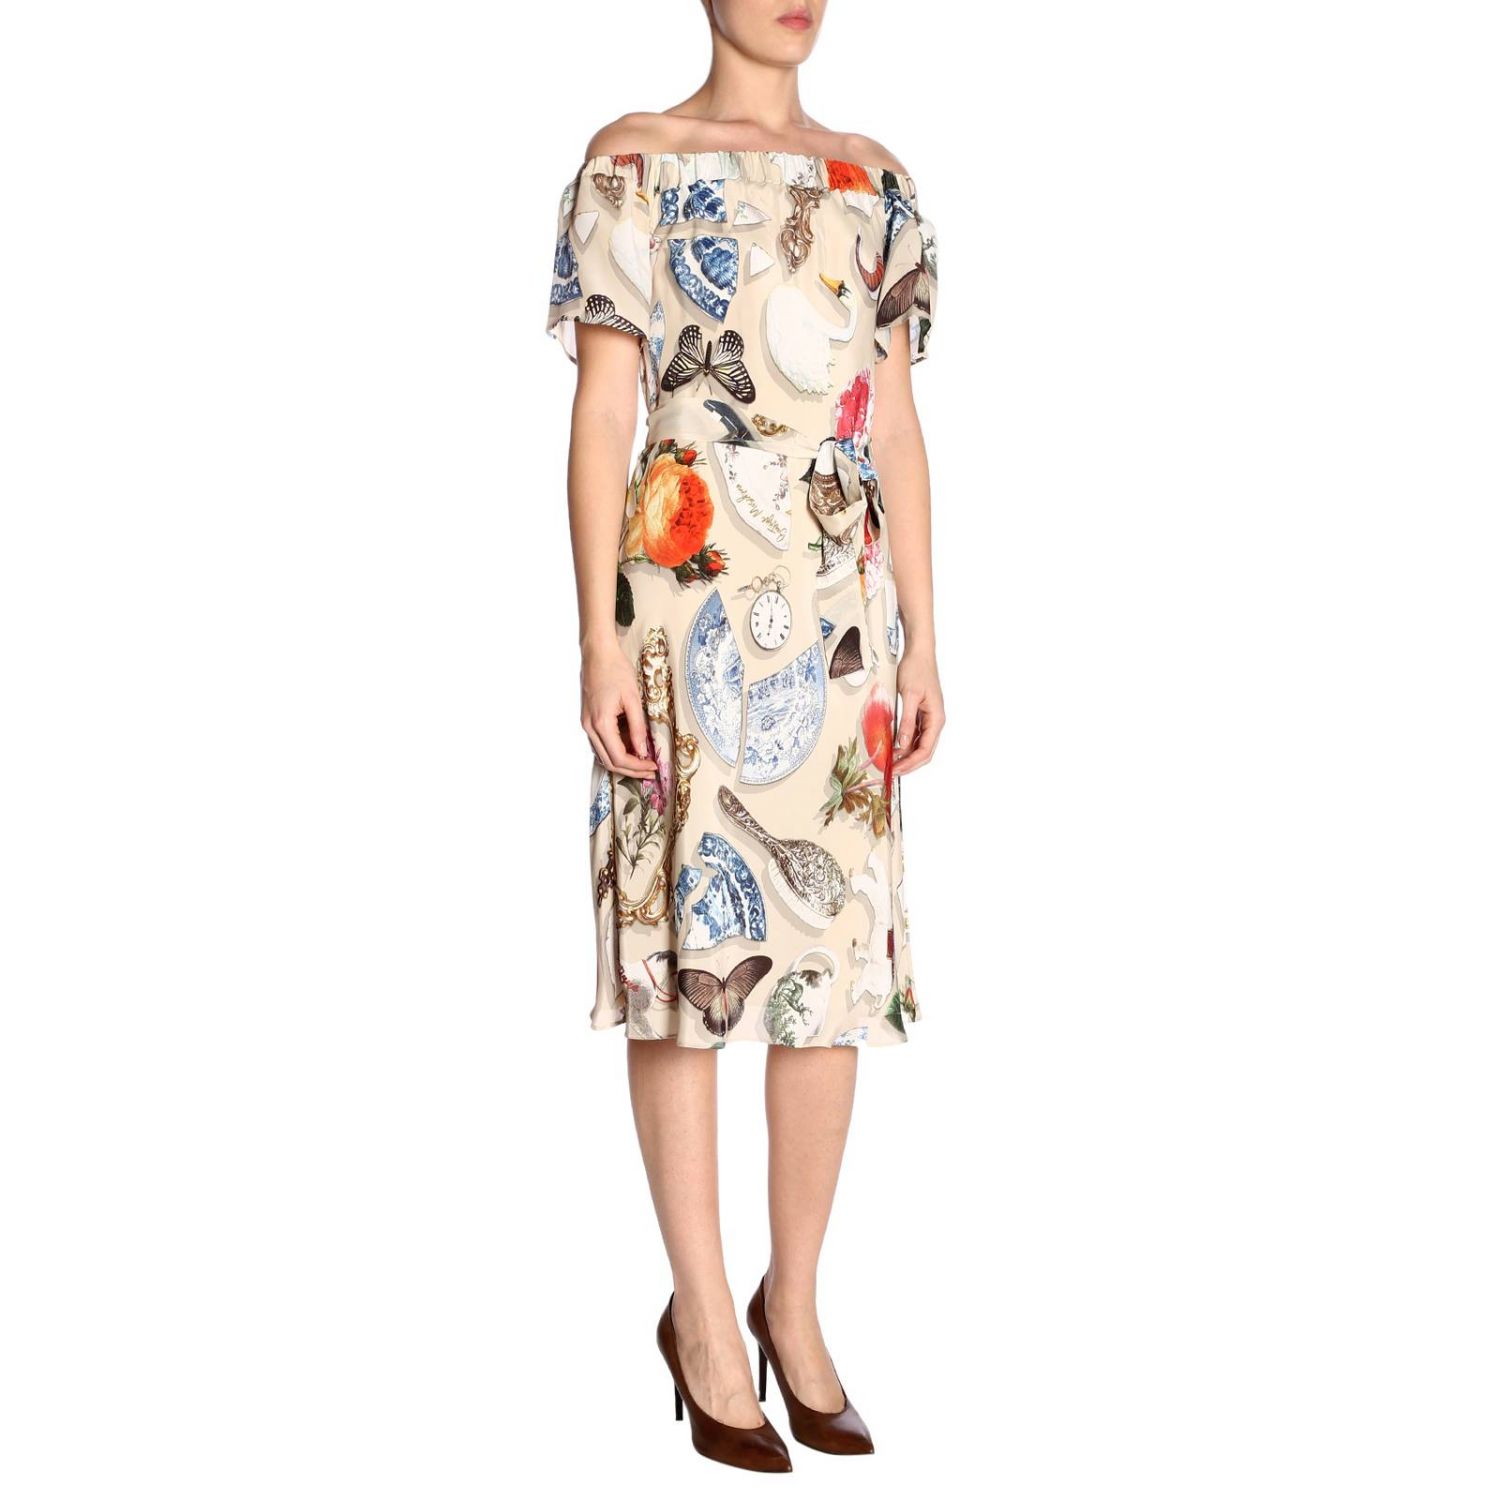 Boutique Moschino Outlet: Dress women - Beige | Dress Boutique Moschino ...